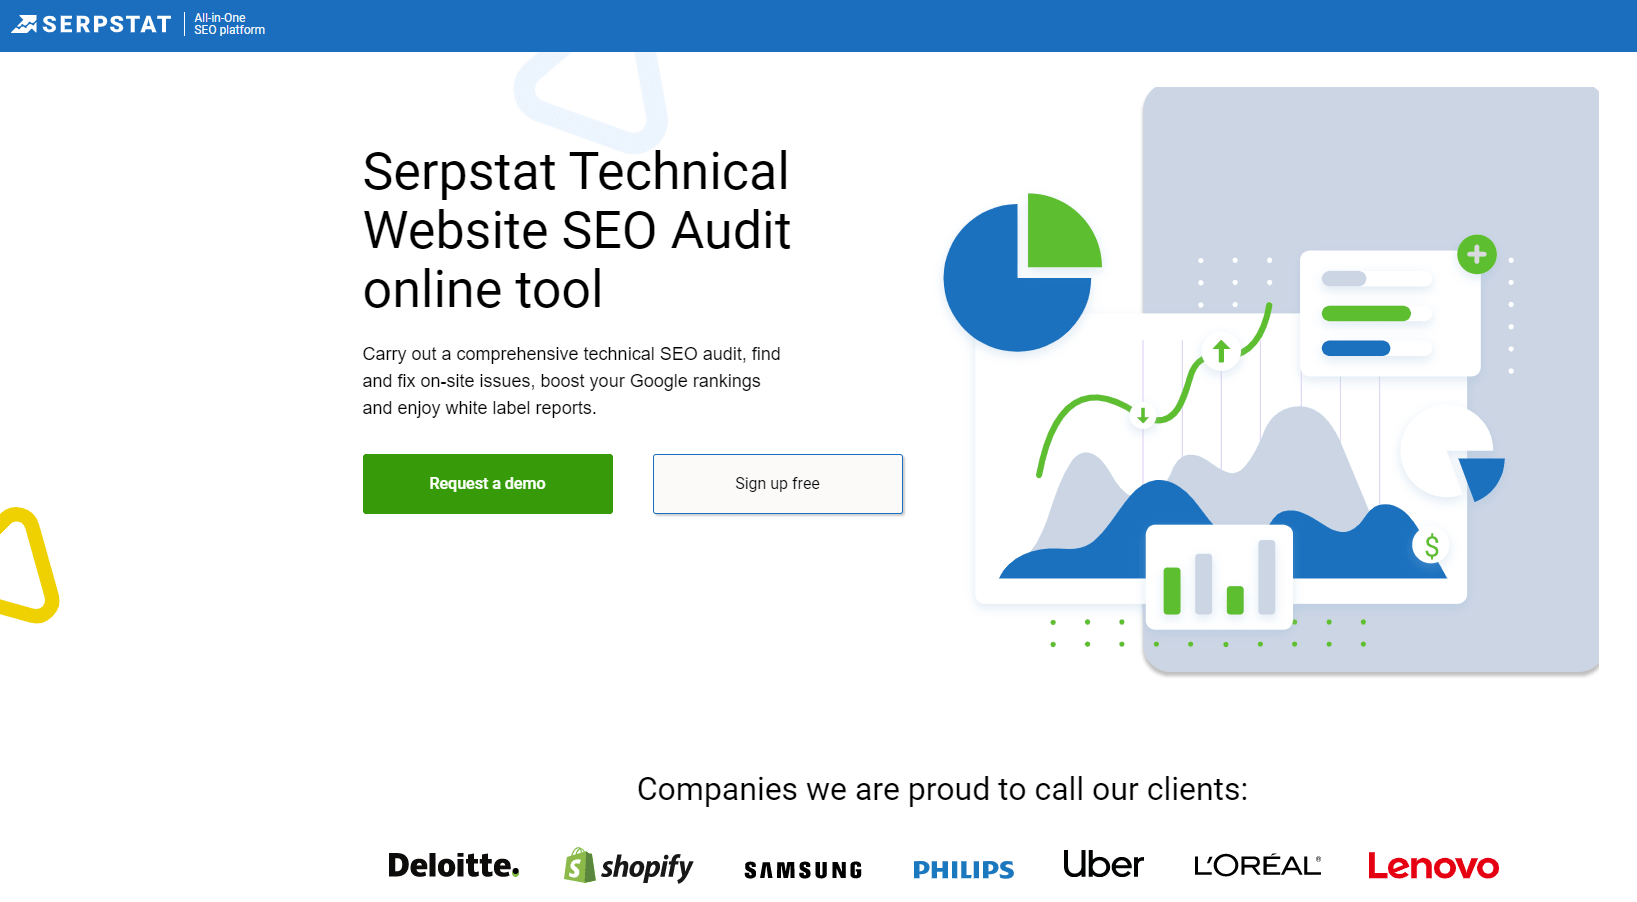 Serpstat Technical Website SEO Audit